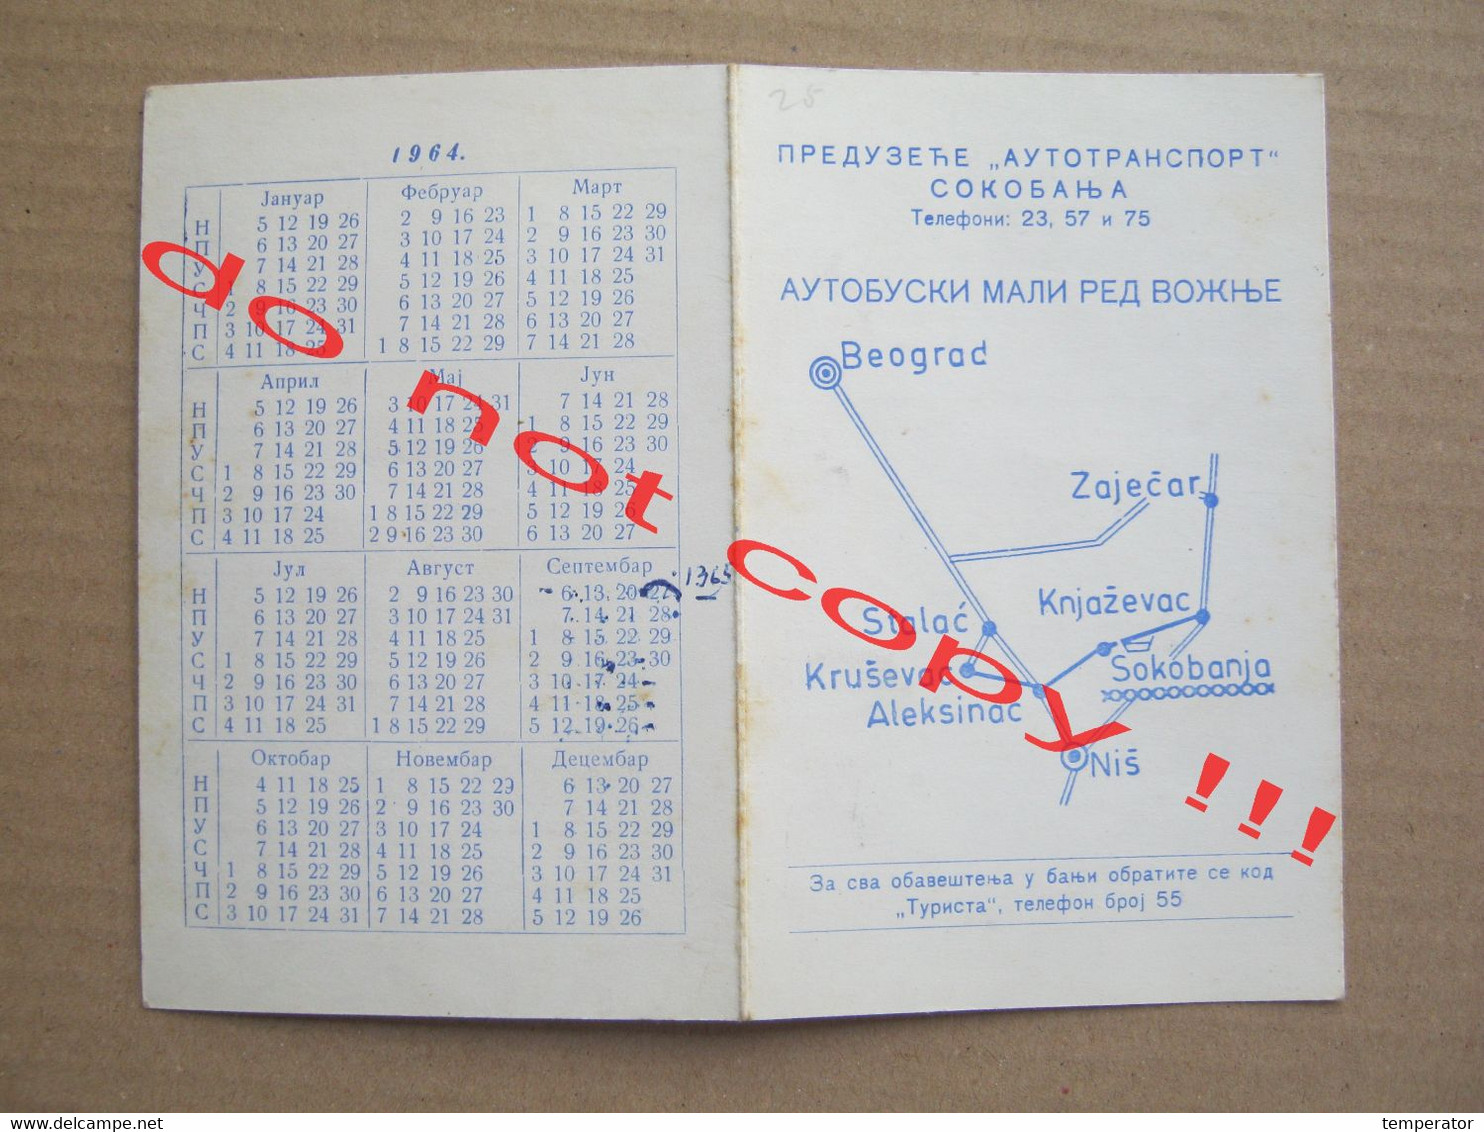 Yugoslavia " AUTOTRANSPORT " Soko Banja / Bus Small Timetable With Calendar ( 1964 ) - Europe